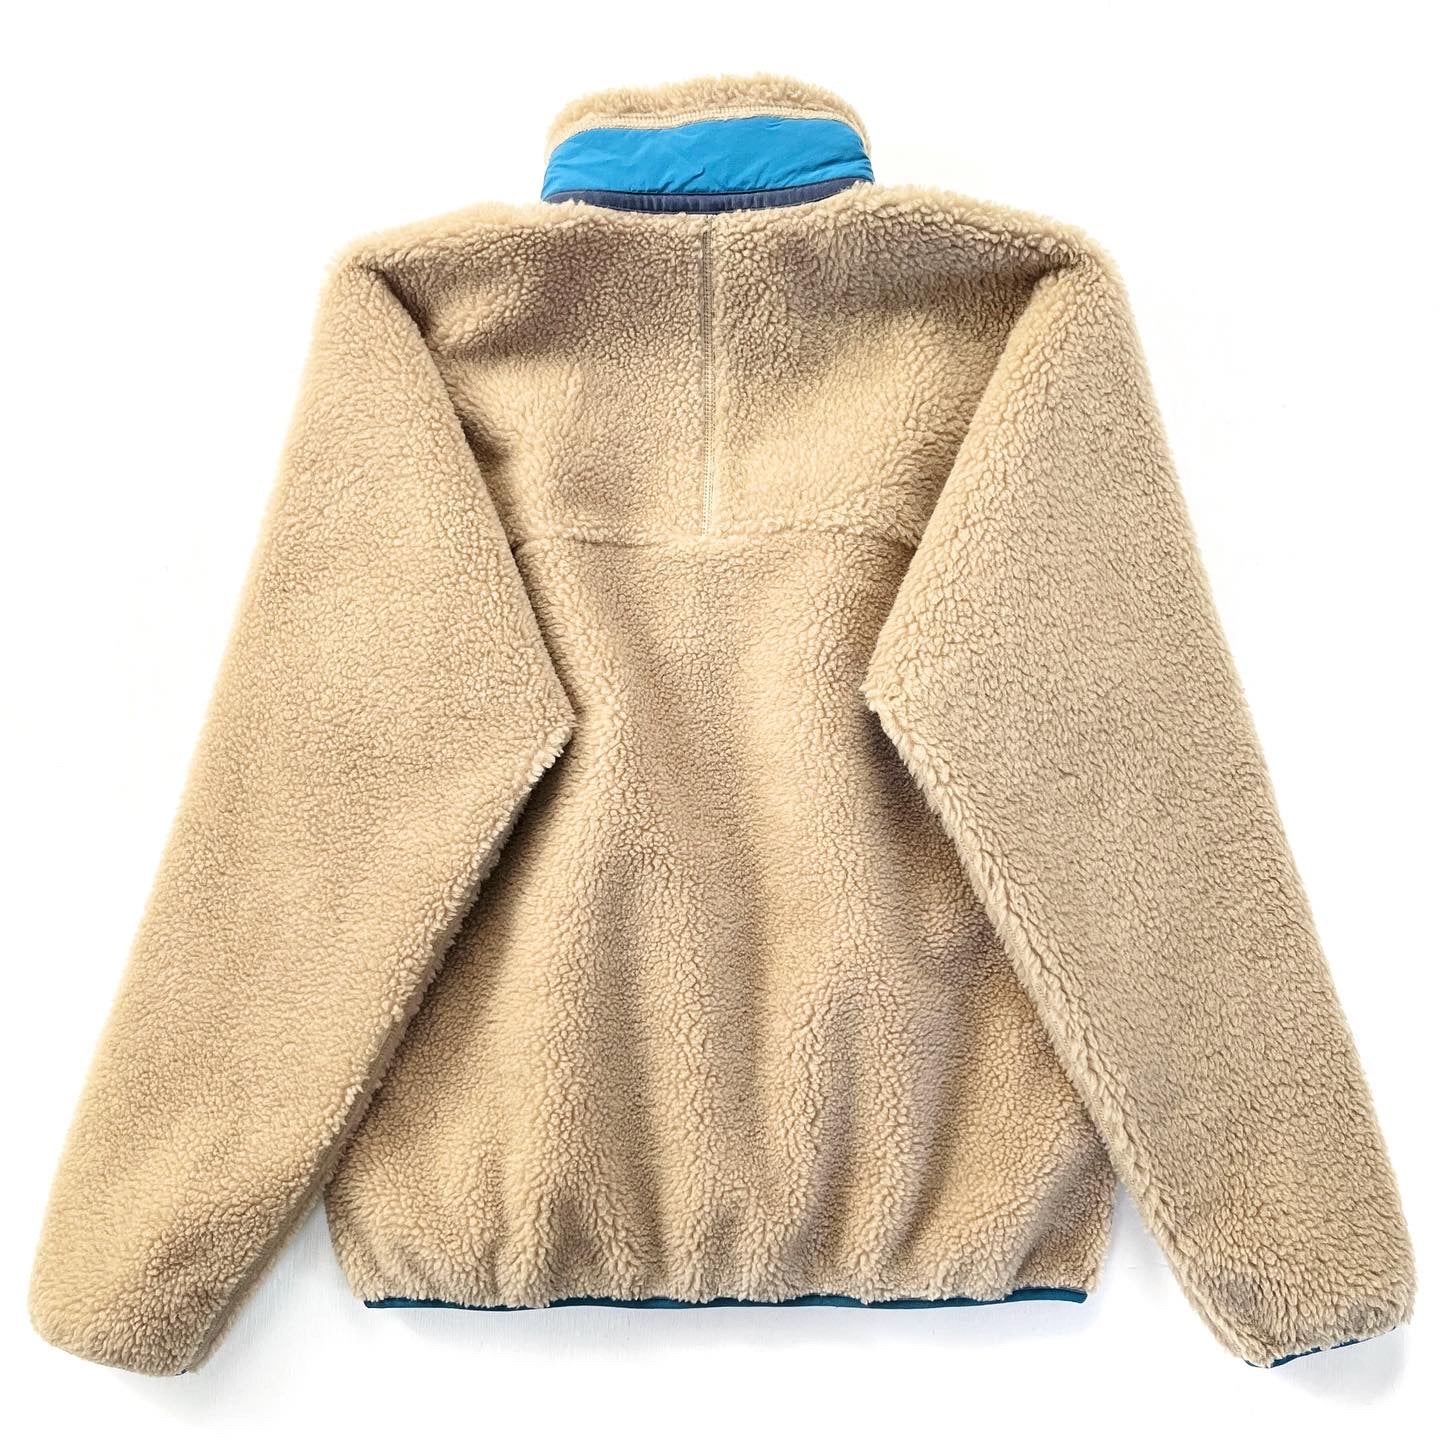 2015 Patagonia Classic Retro-X Fleece Jacket, Ash Tan & Blue (S)